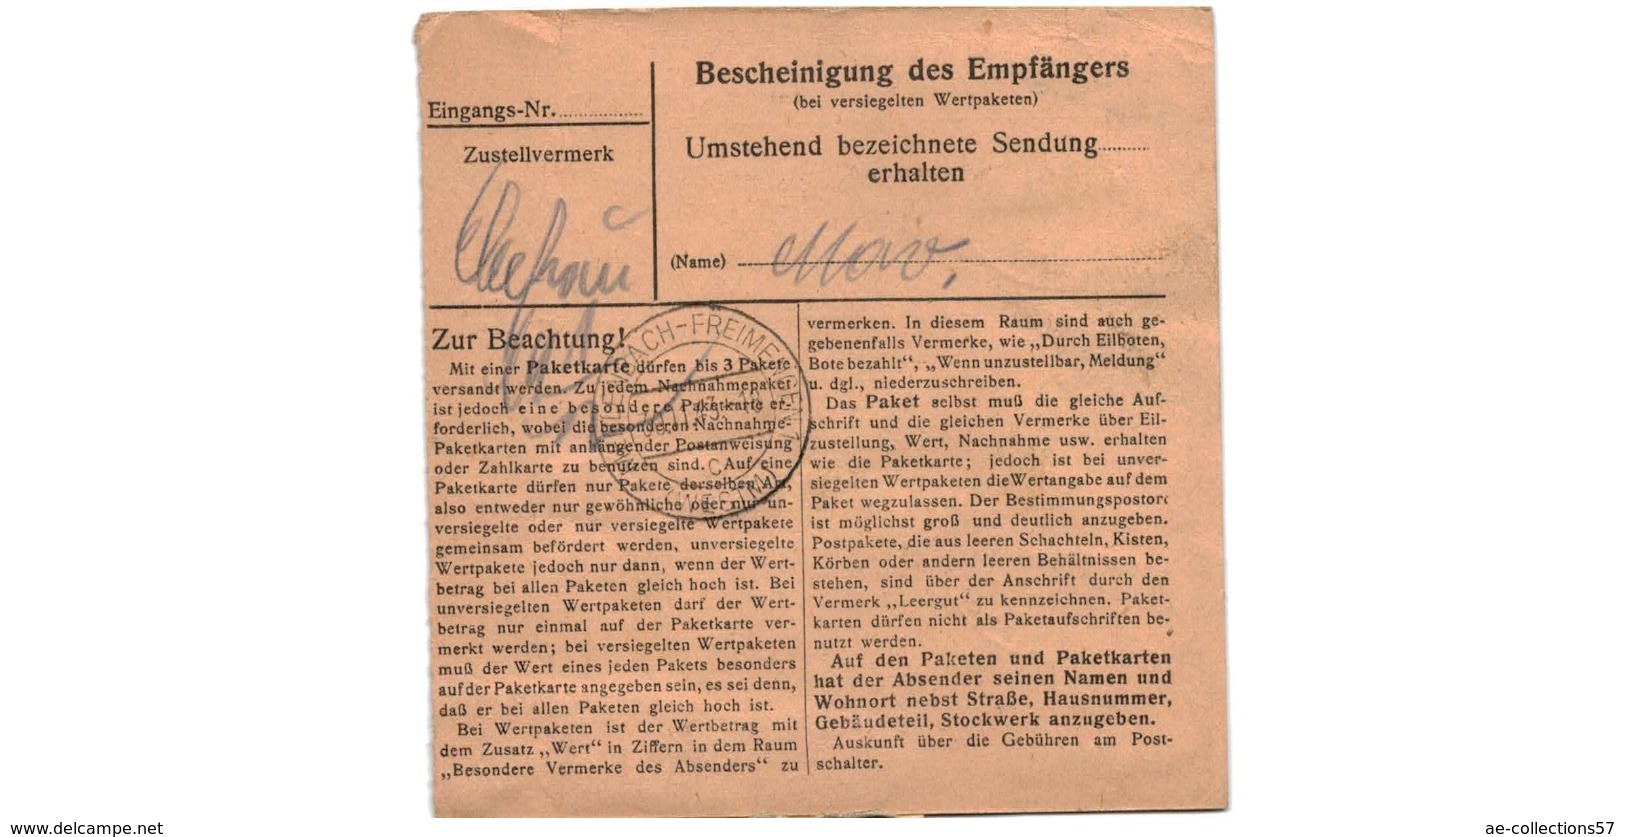 Colis Postal  / De Domschale (Kärtnten )  / 17-11-43 - Briefe U. Dokumente